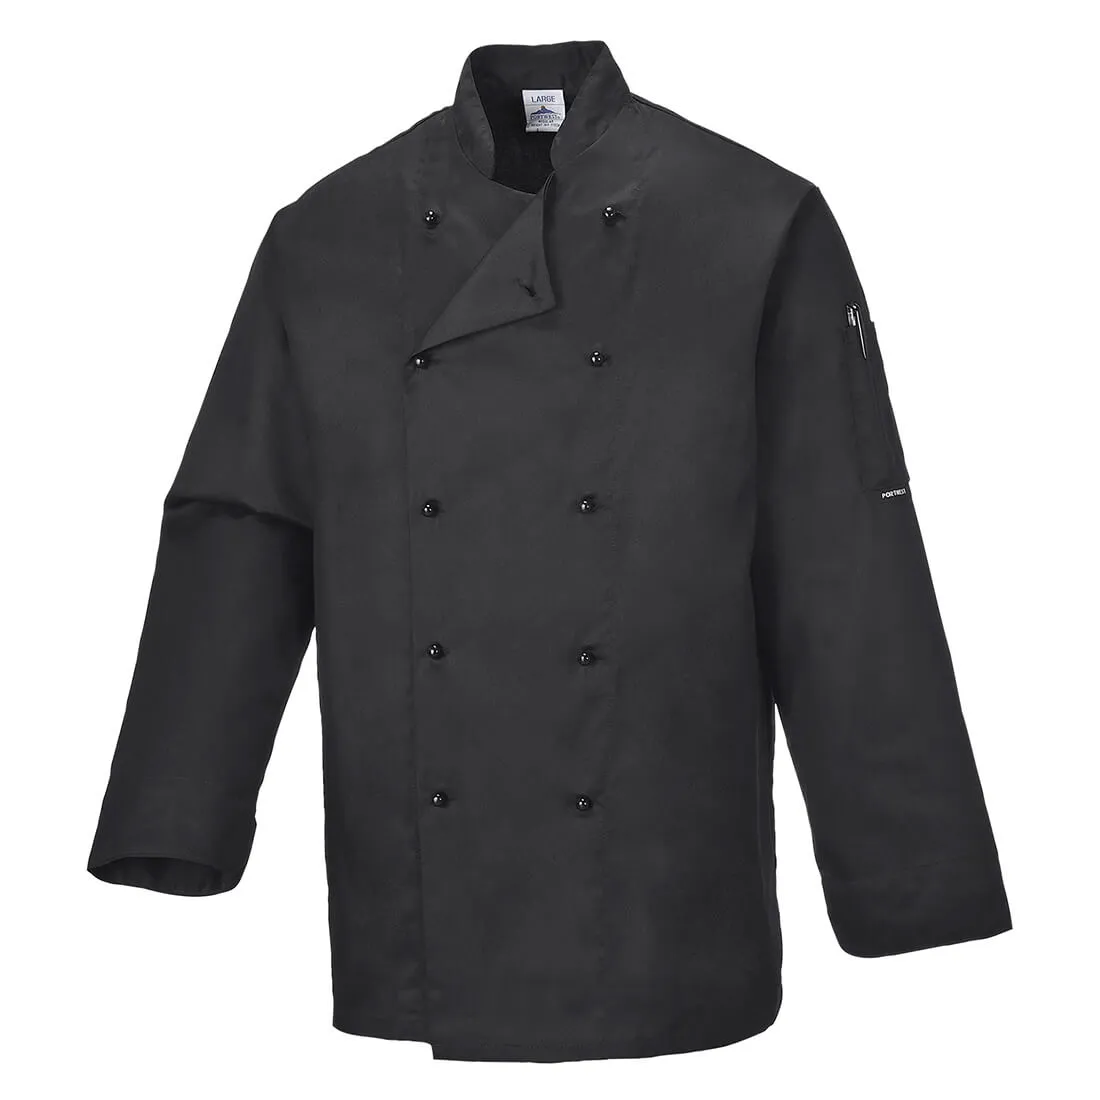 Portwest Unisex Somerset Chefs Jacket - Black, M